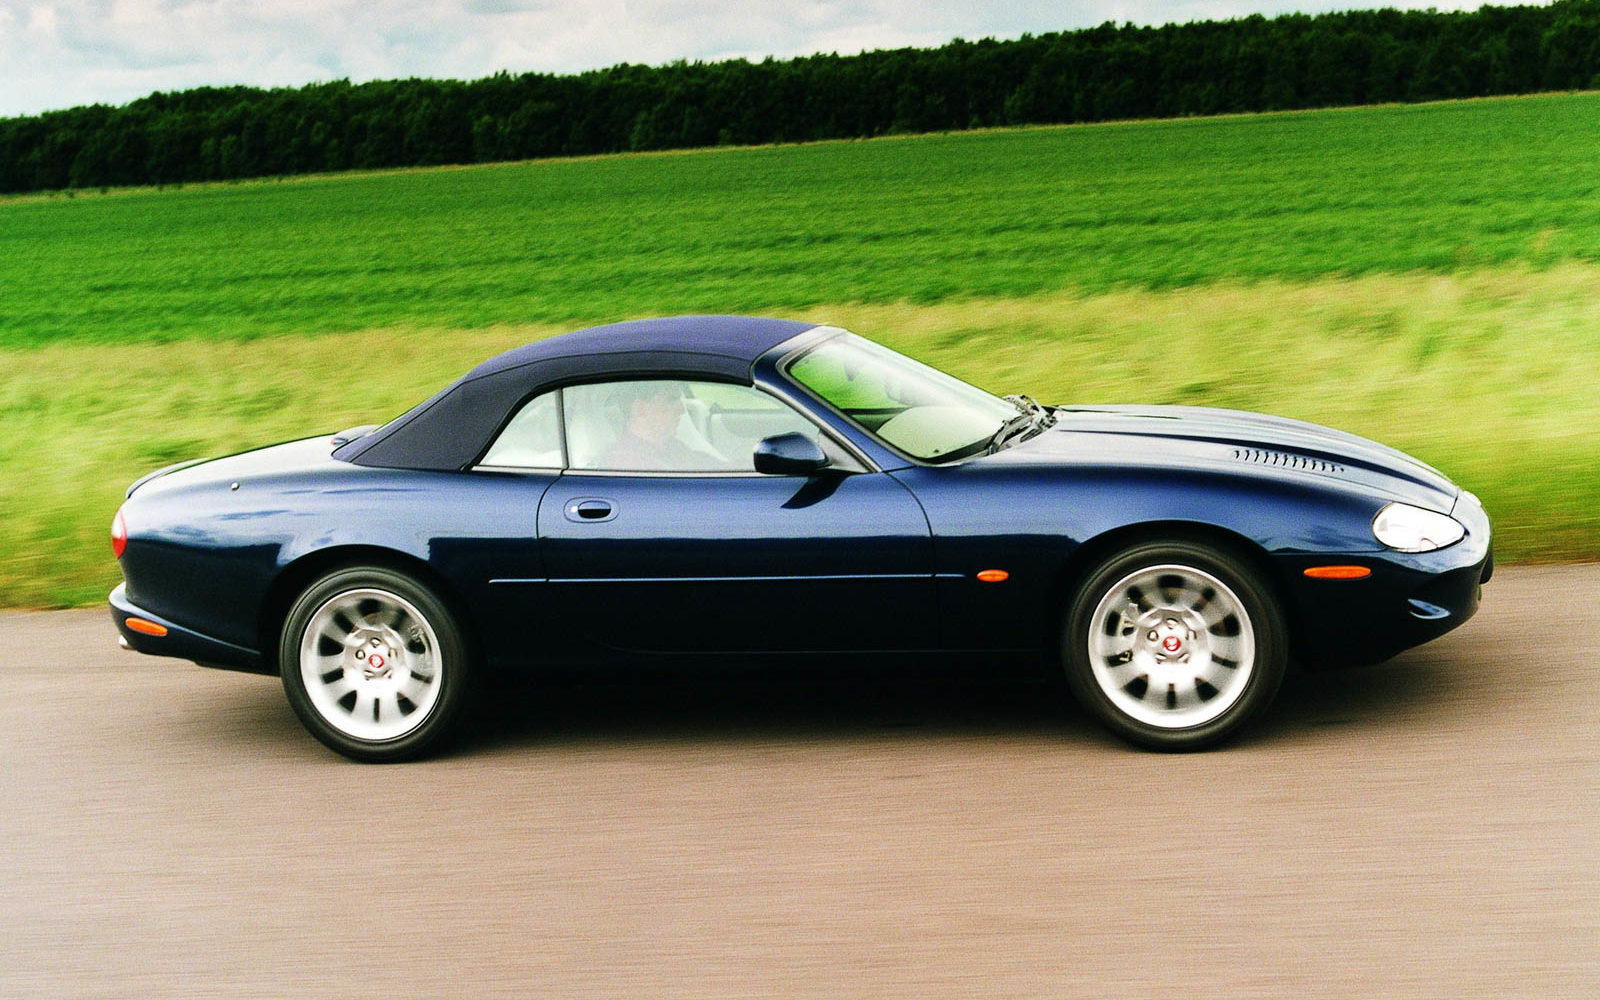 Jaguar XKR 1998 Convertible